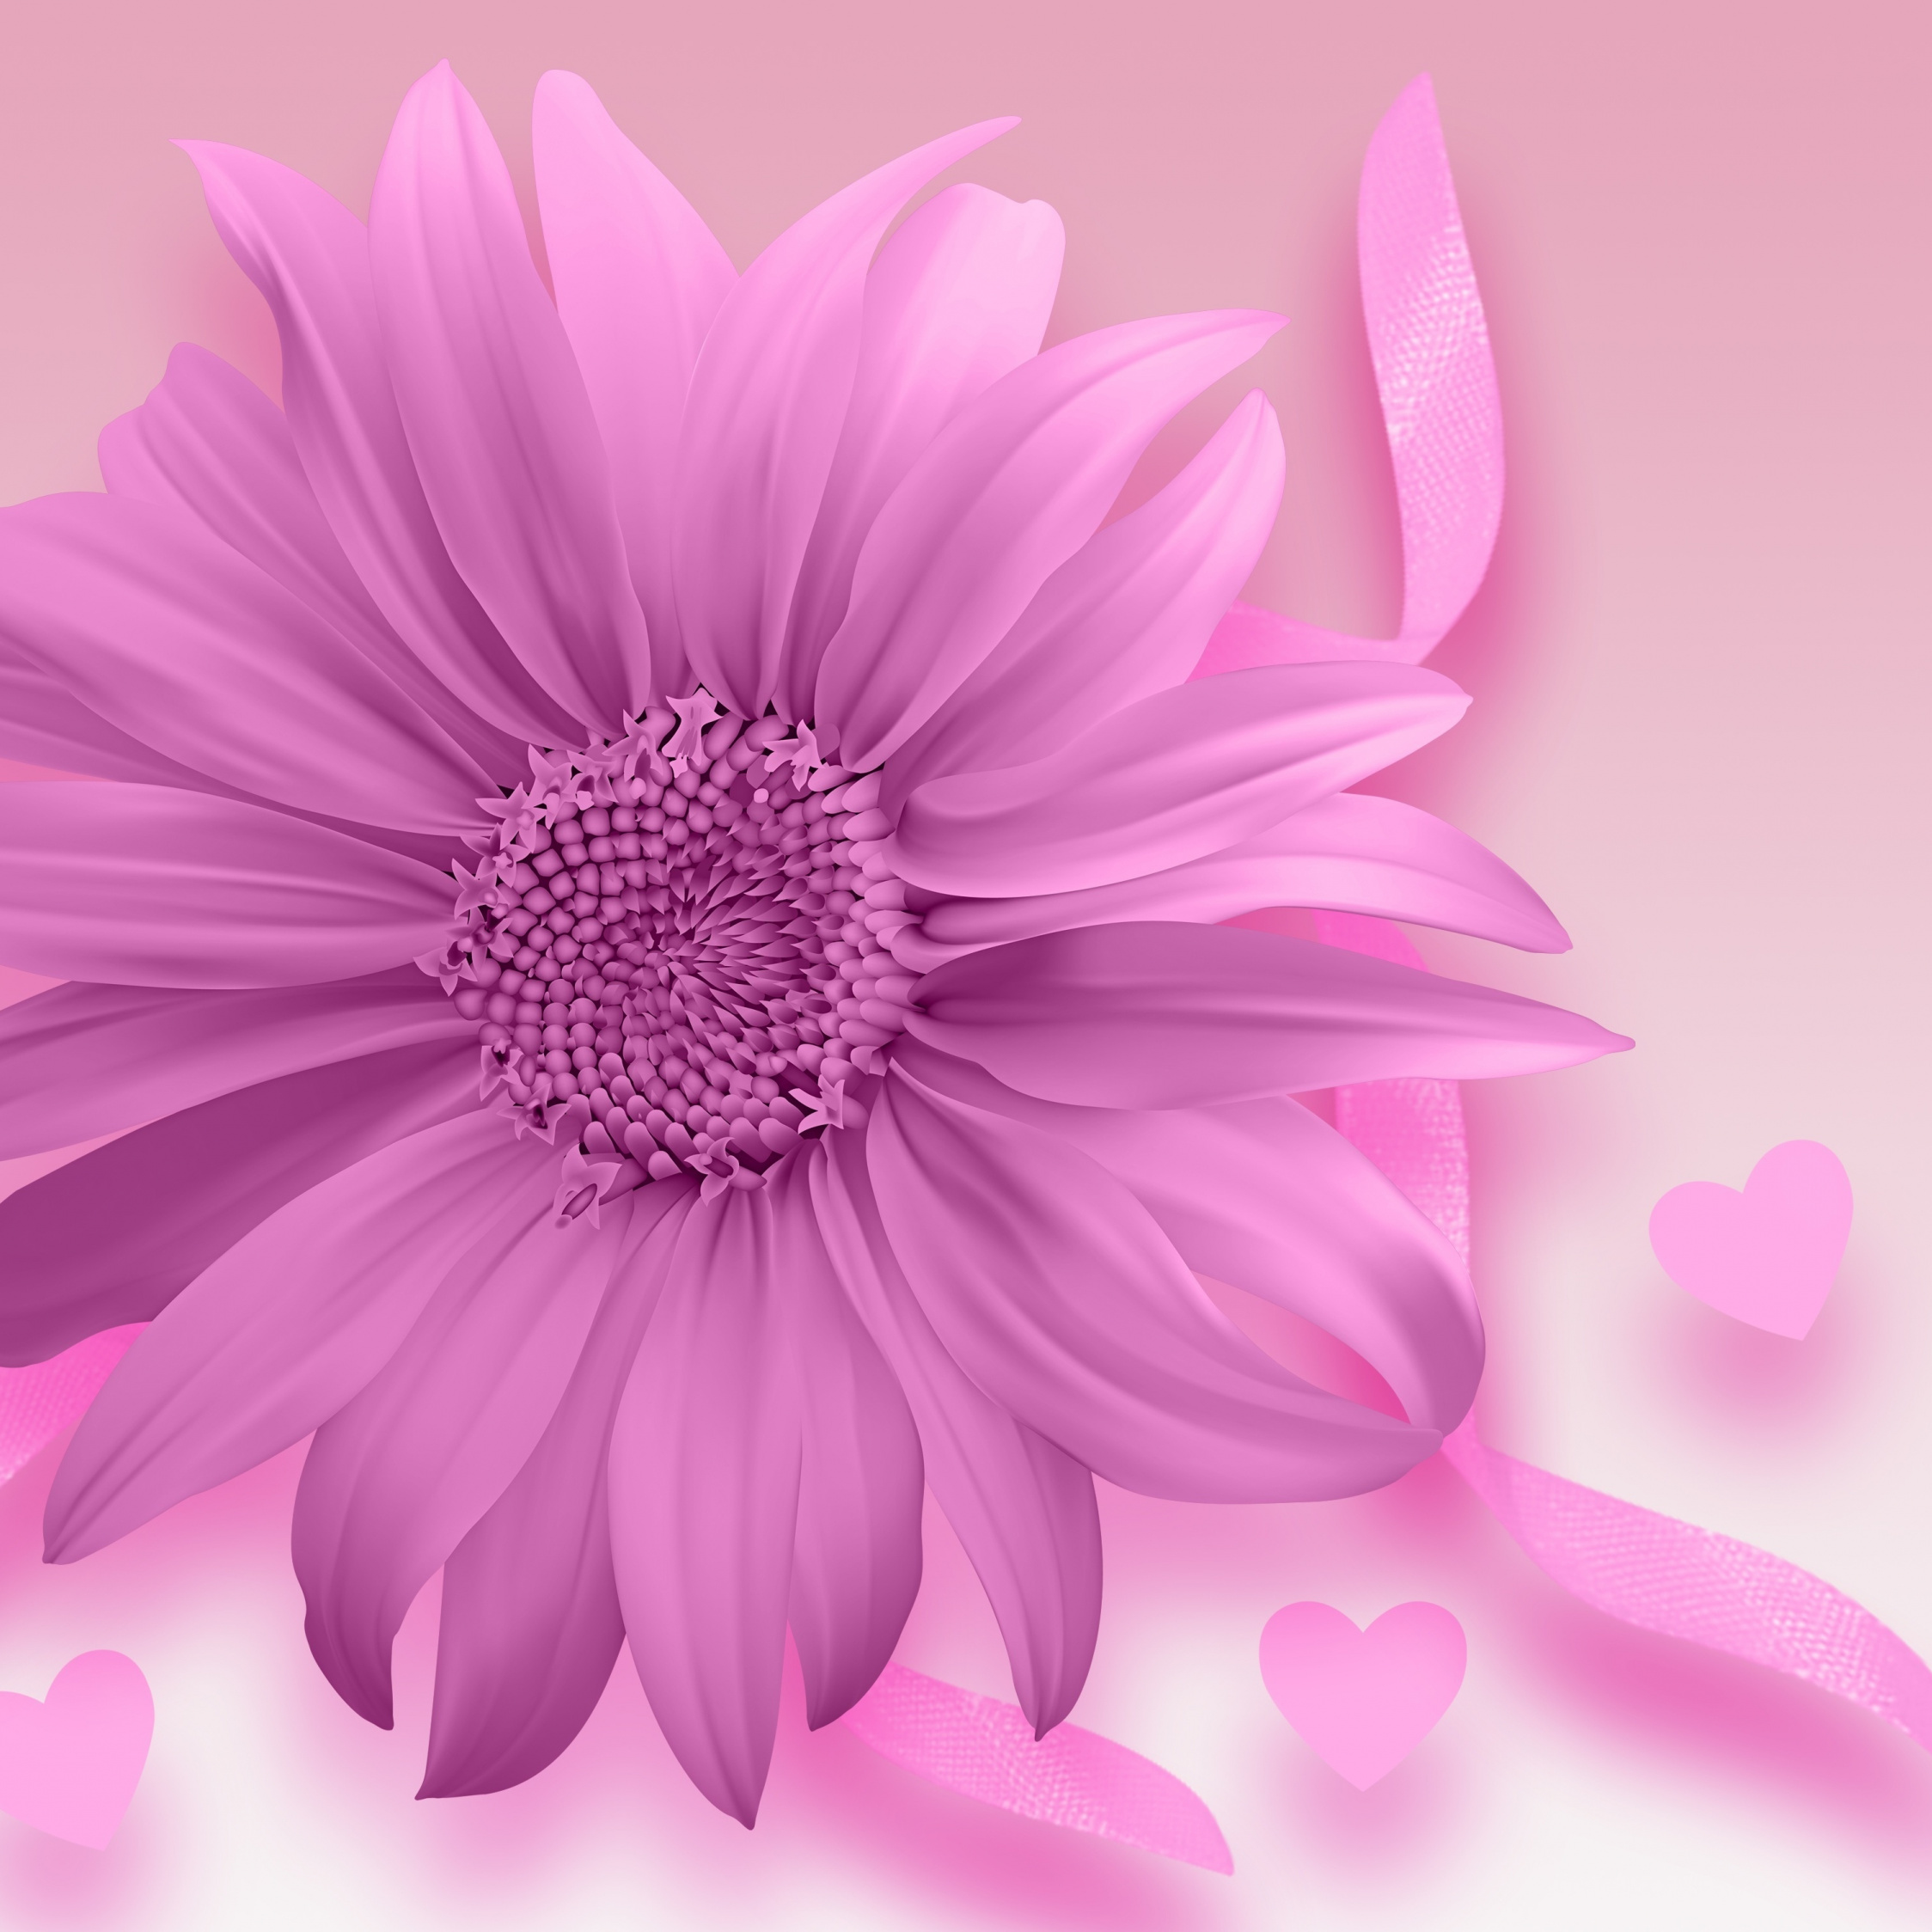 Wallpaper Digital Art, Gerbera, Flower - Good Morning Flower Picture Download , HD Wallpaper & Backgrounds